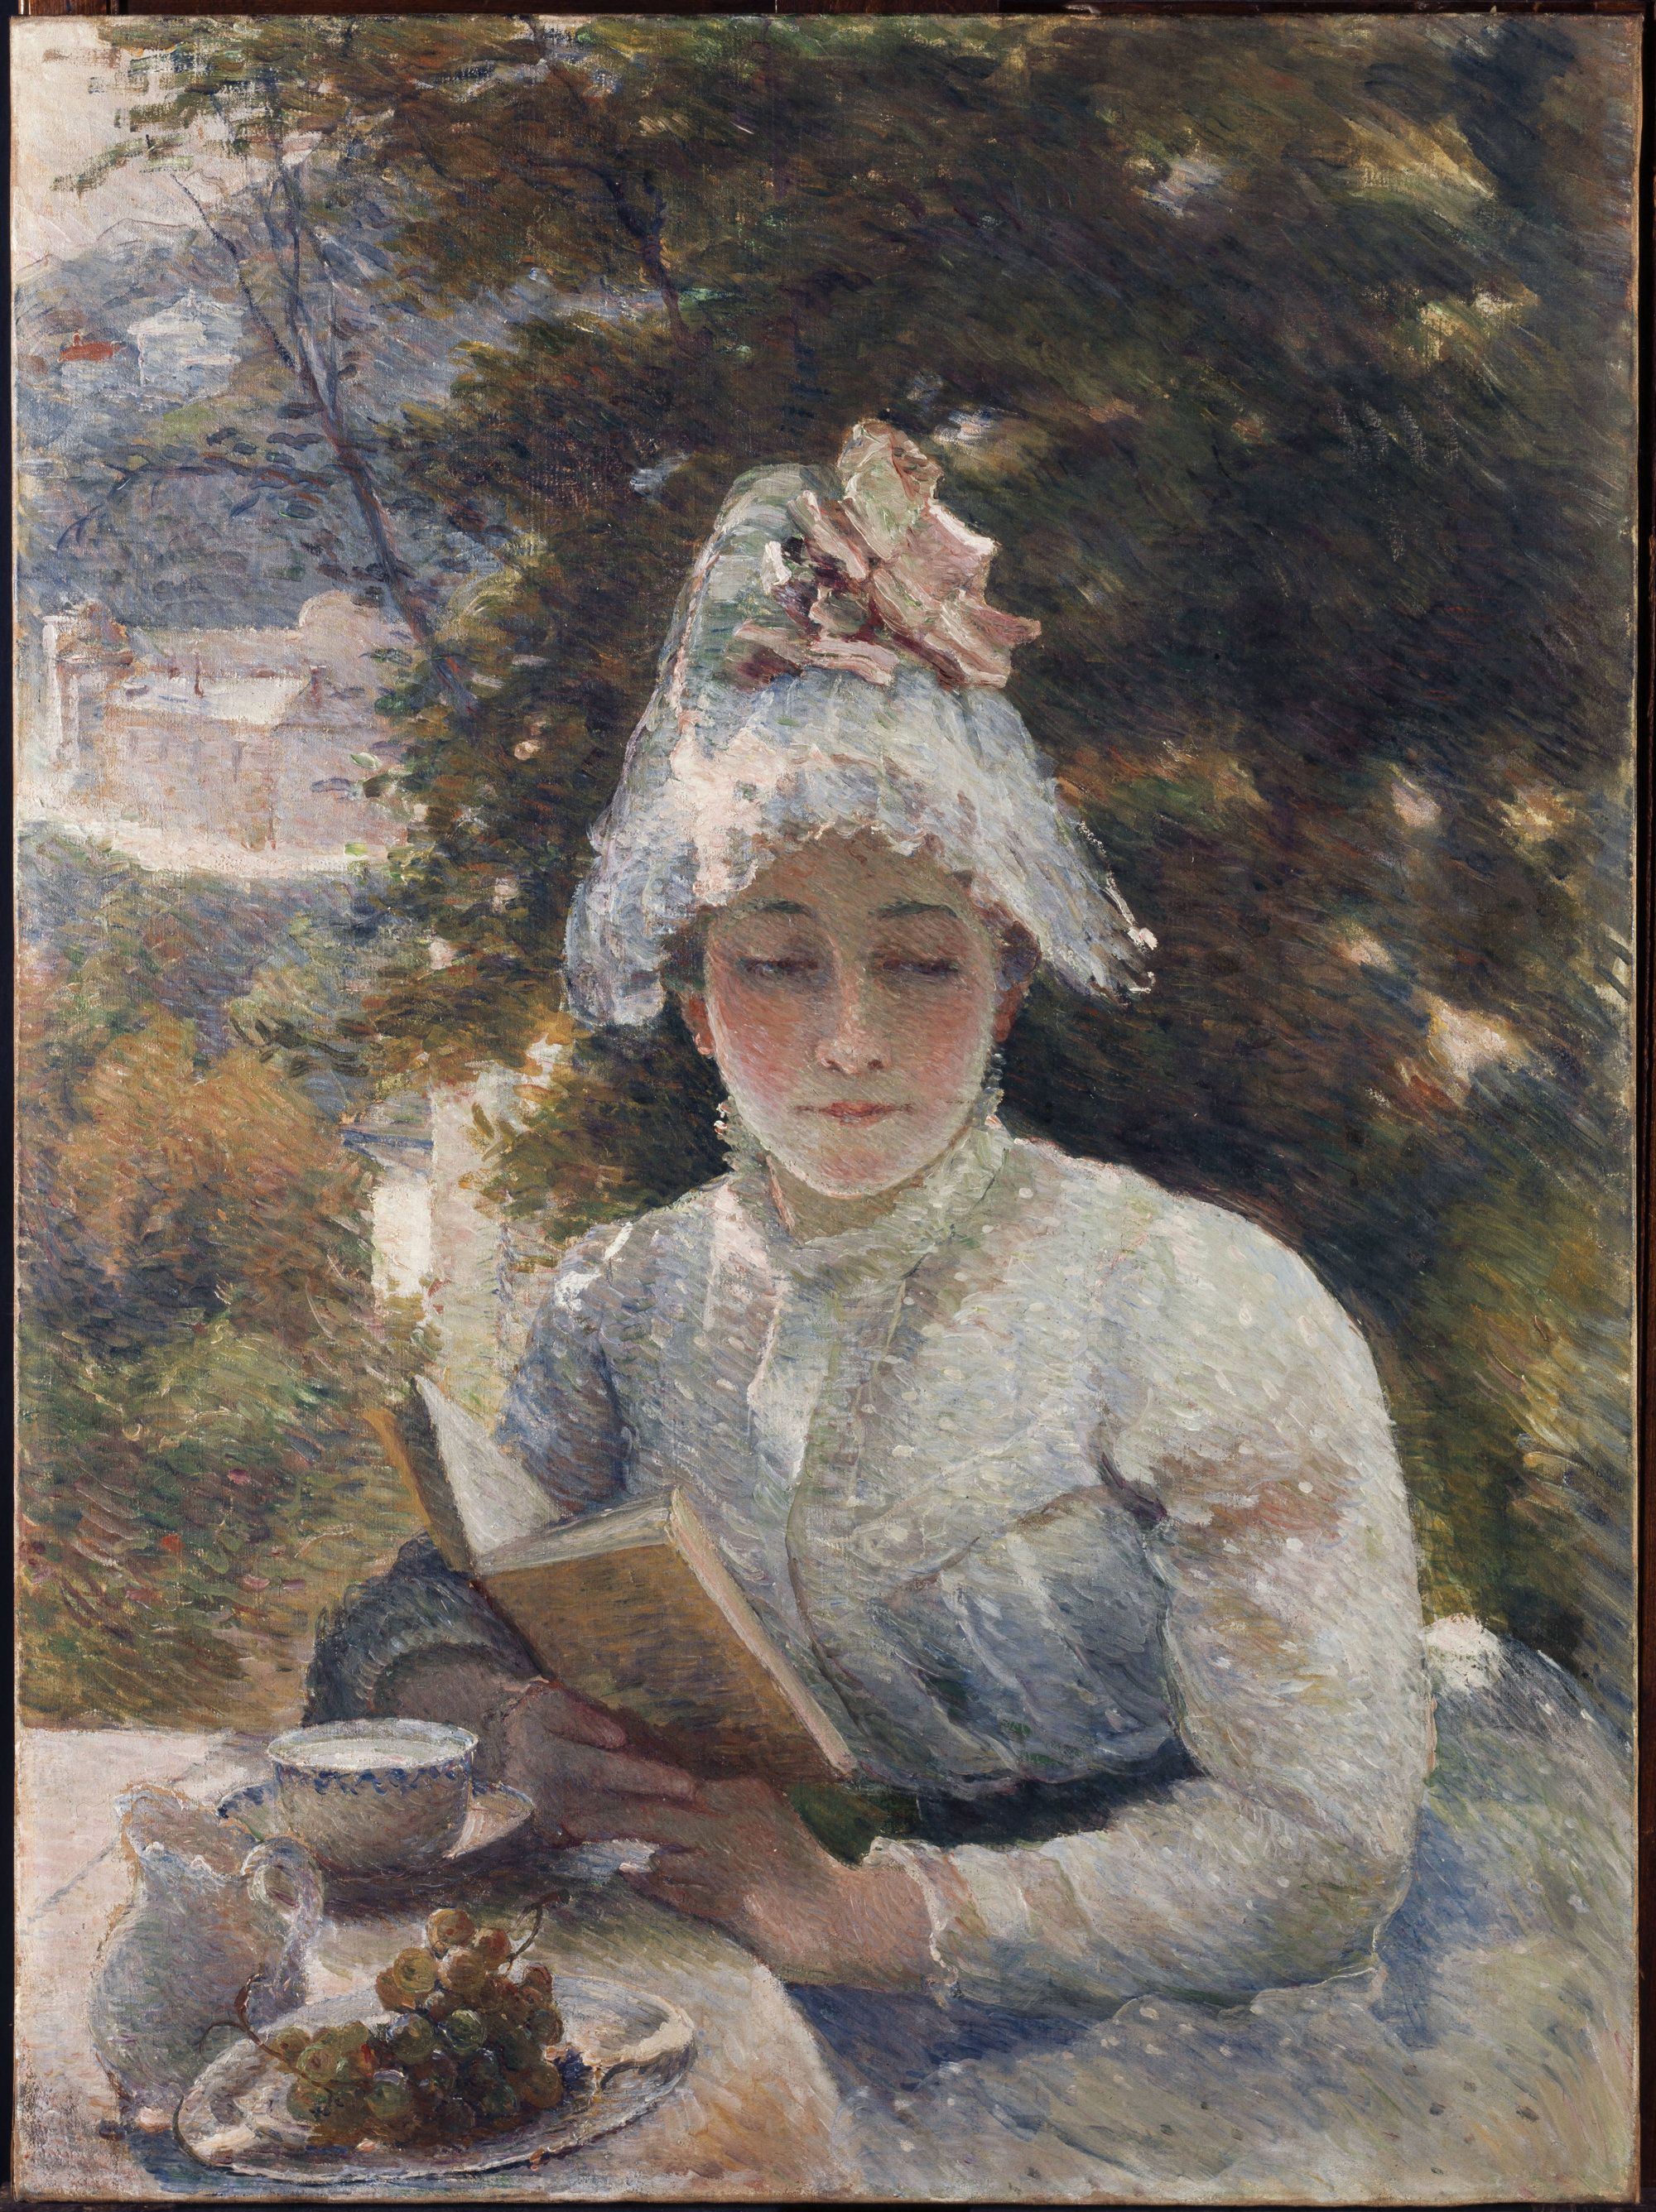 La merienda, Marie Bracquemond, 1880